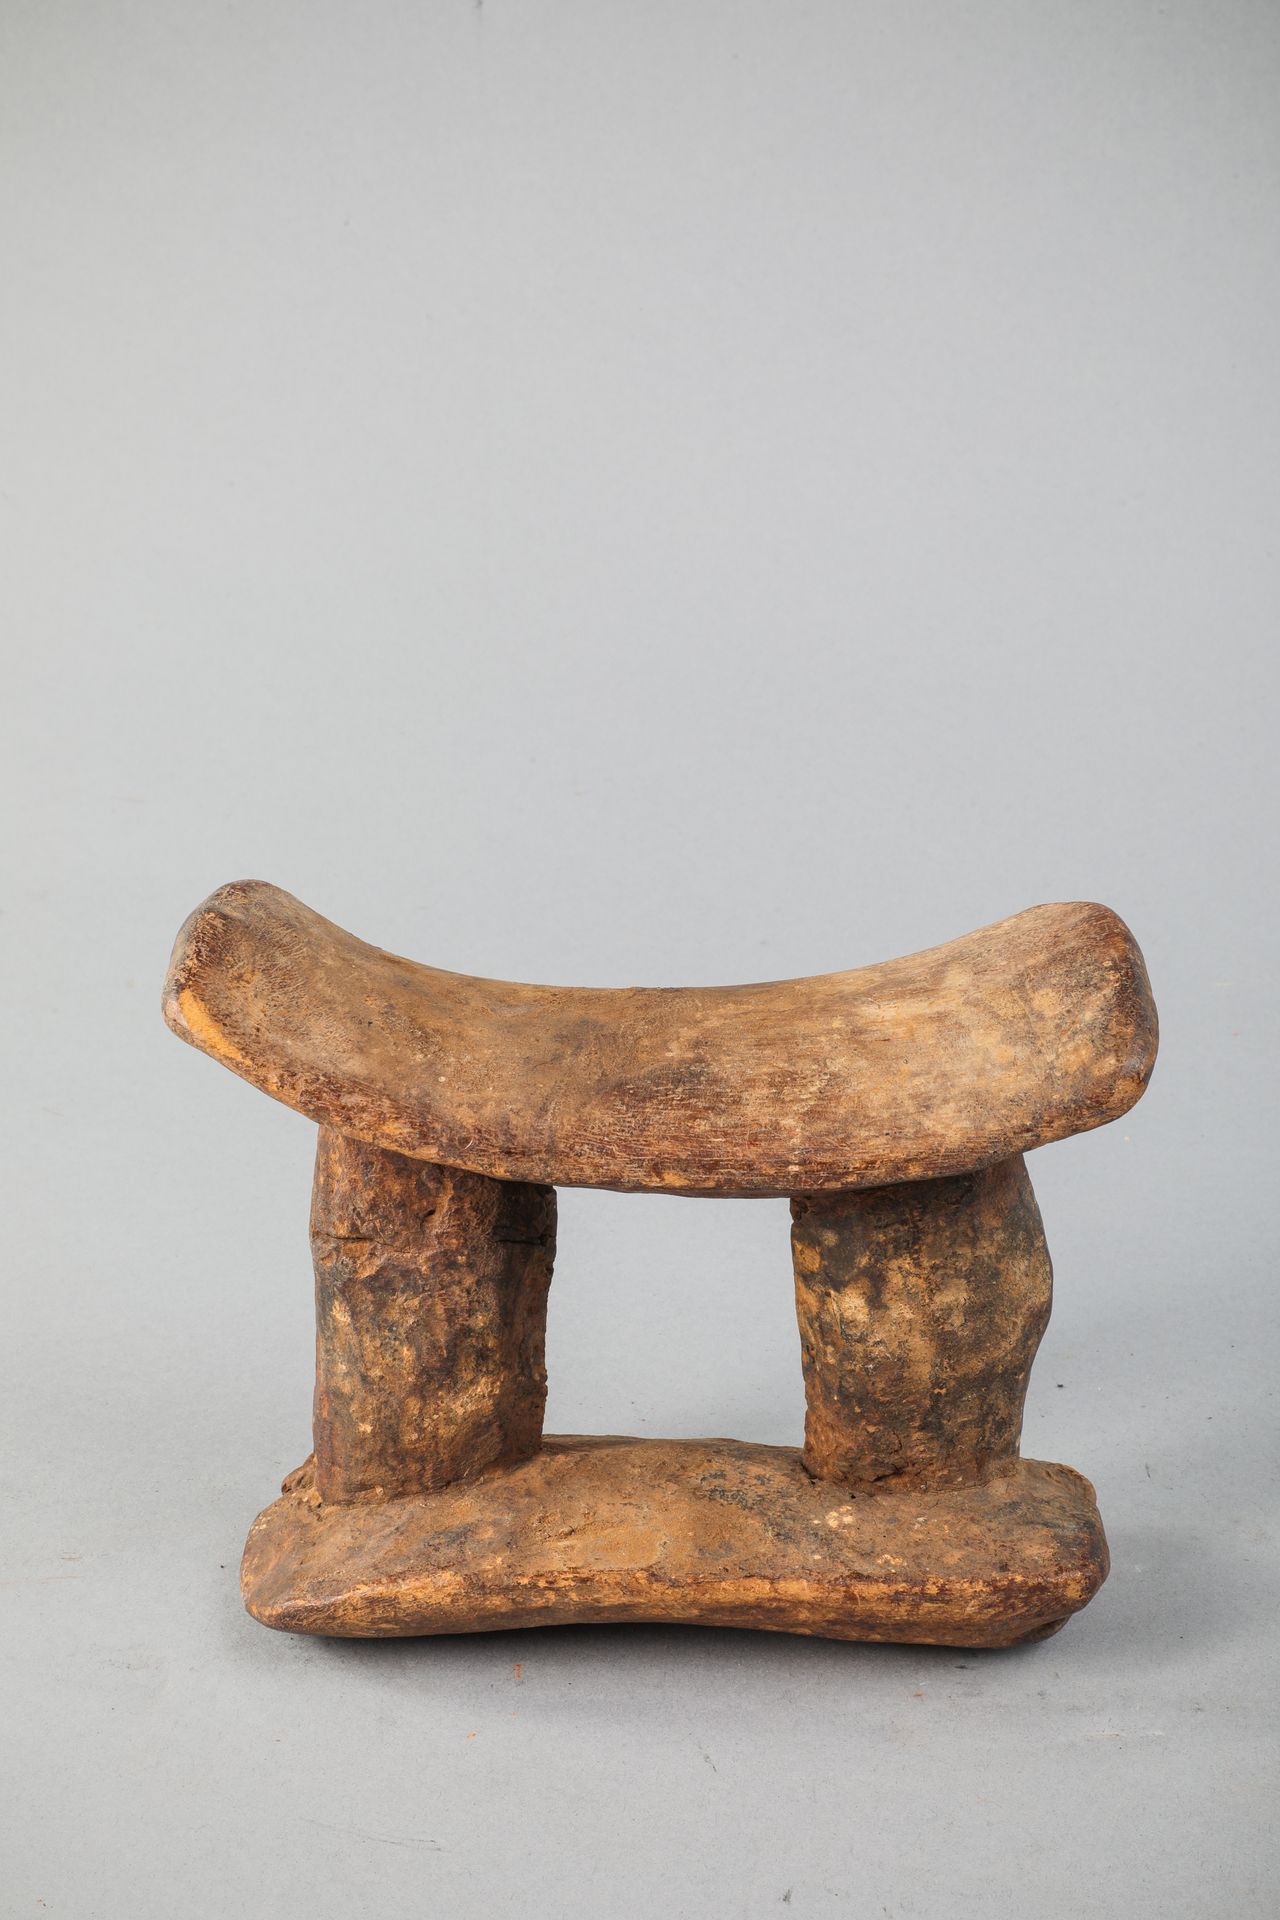 Null Dogon neckrest, Mali. Wood, old brown patina. L 20cm, H 15cm.